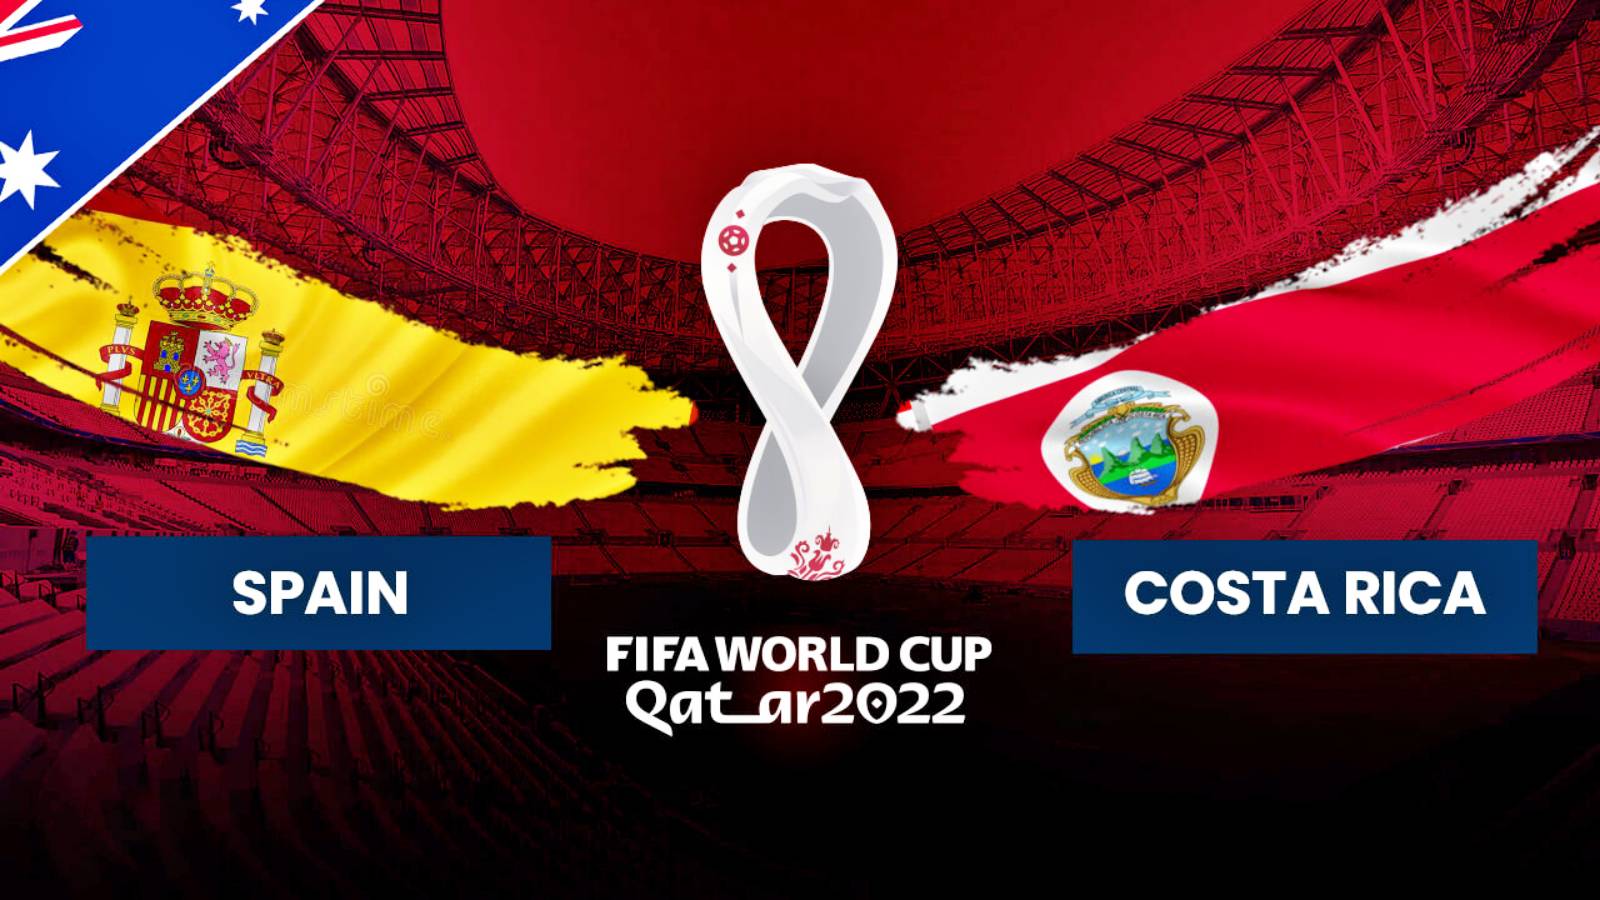 ESPAGNE - COSTA RICA LIVE TVR 1 CHAMPIONNAT DU MONDE 2022 QATAR